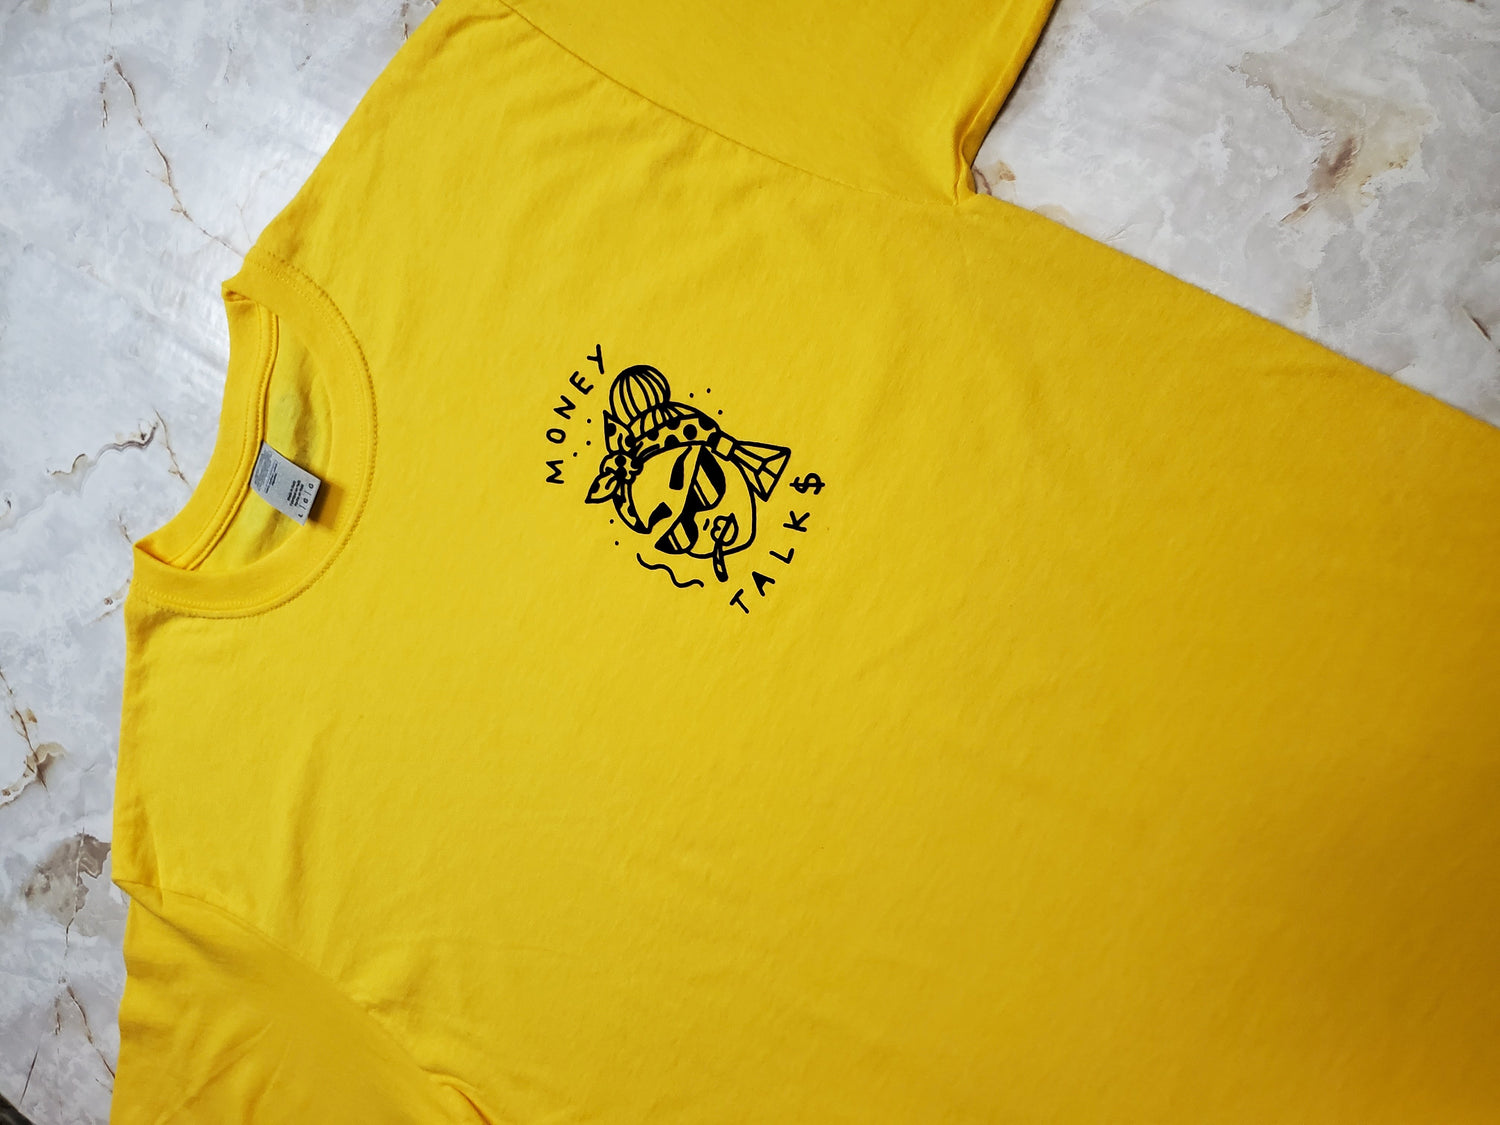 Money Talks T-Shirt (Yellow) - Centre Ave Clothing Co.